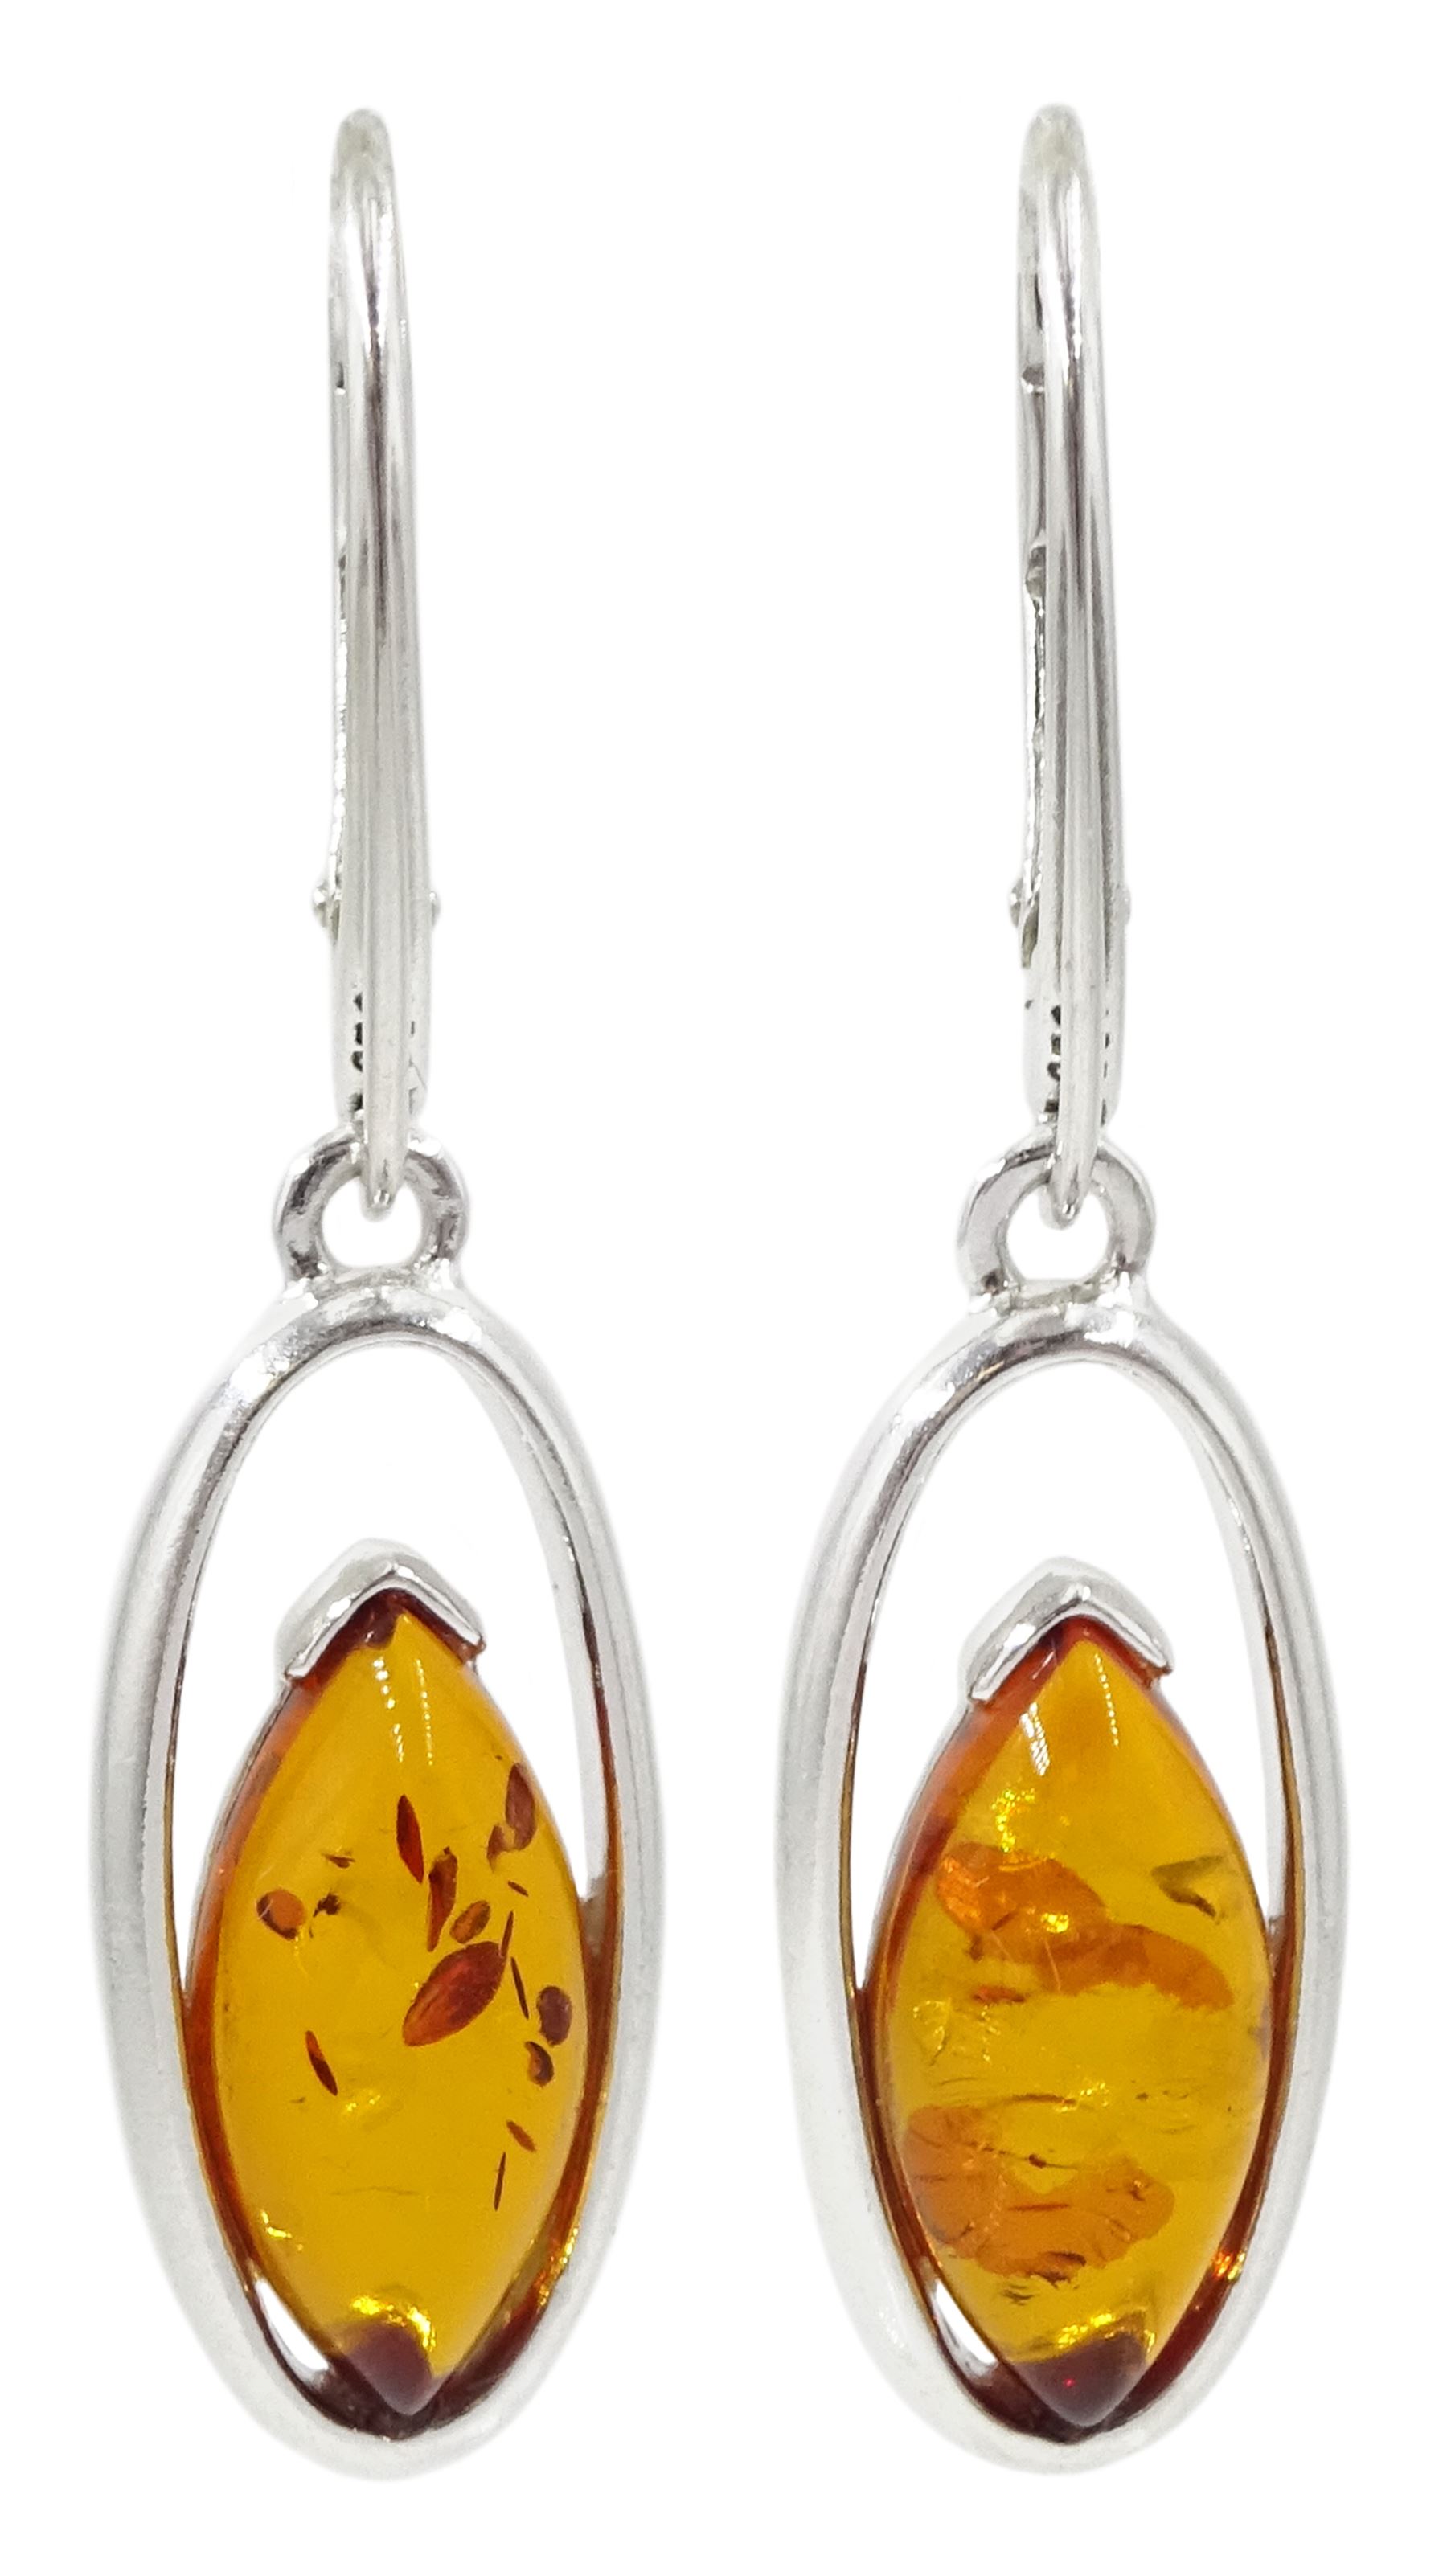 Pair of silver Baltic amber pendant earrings